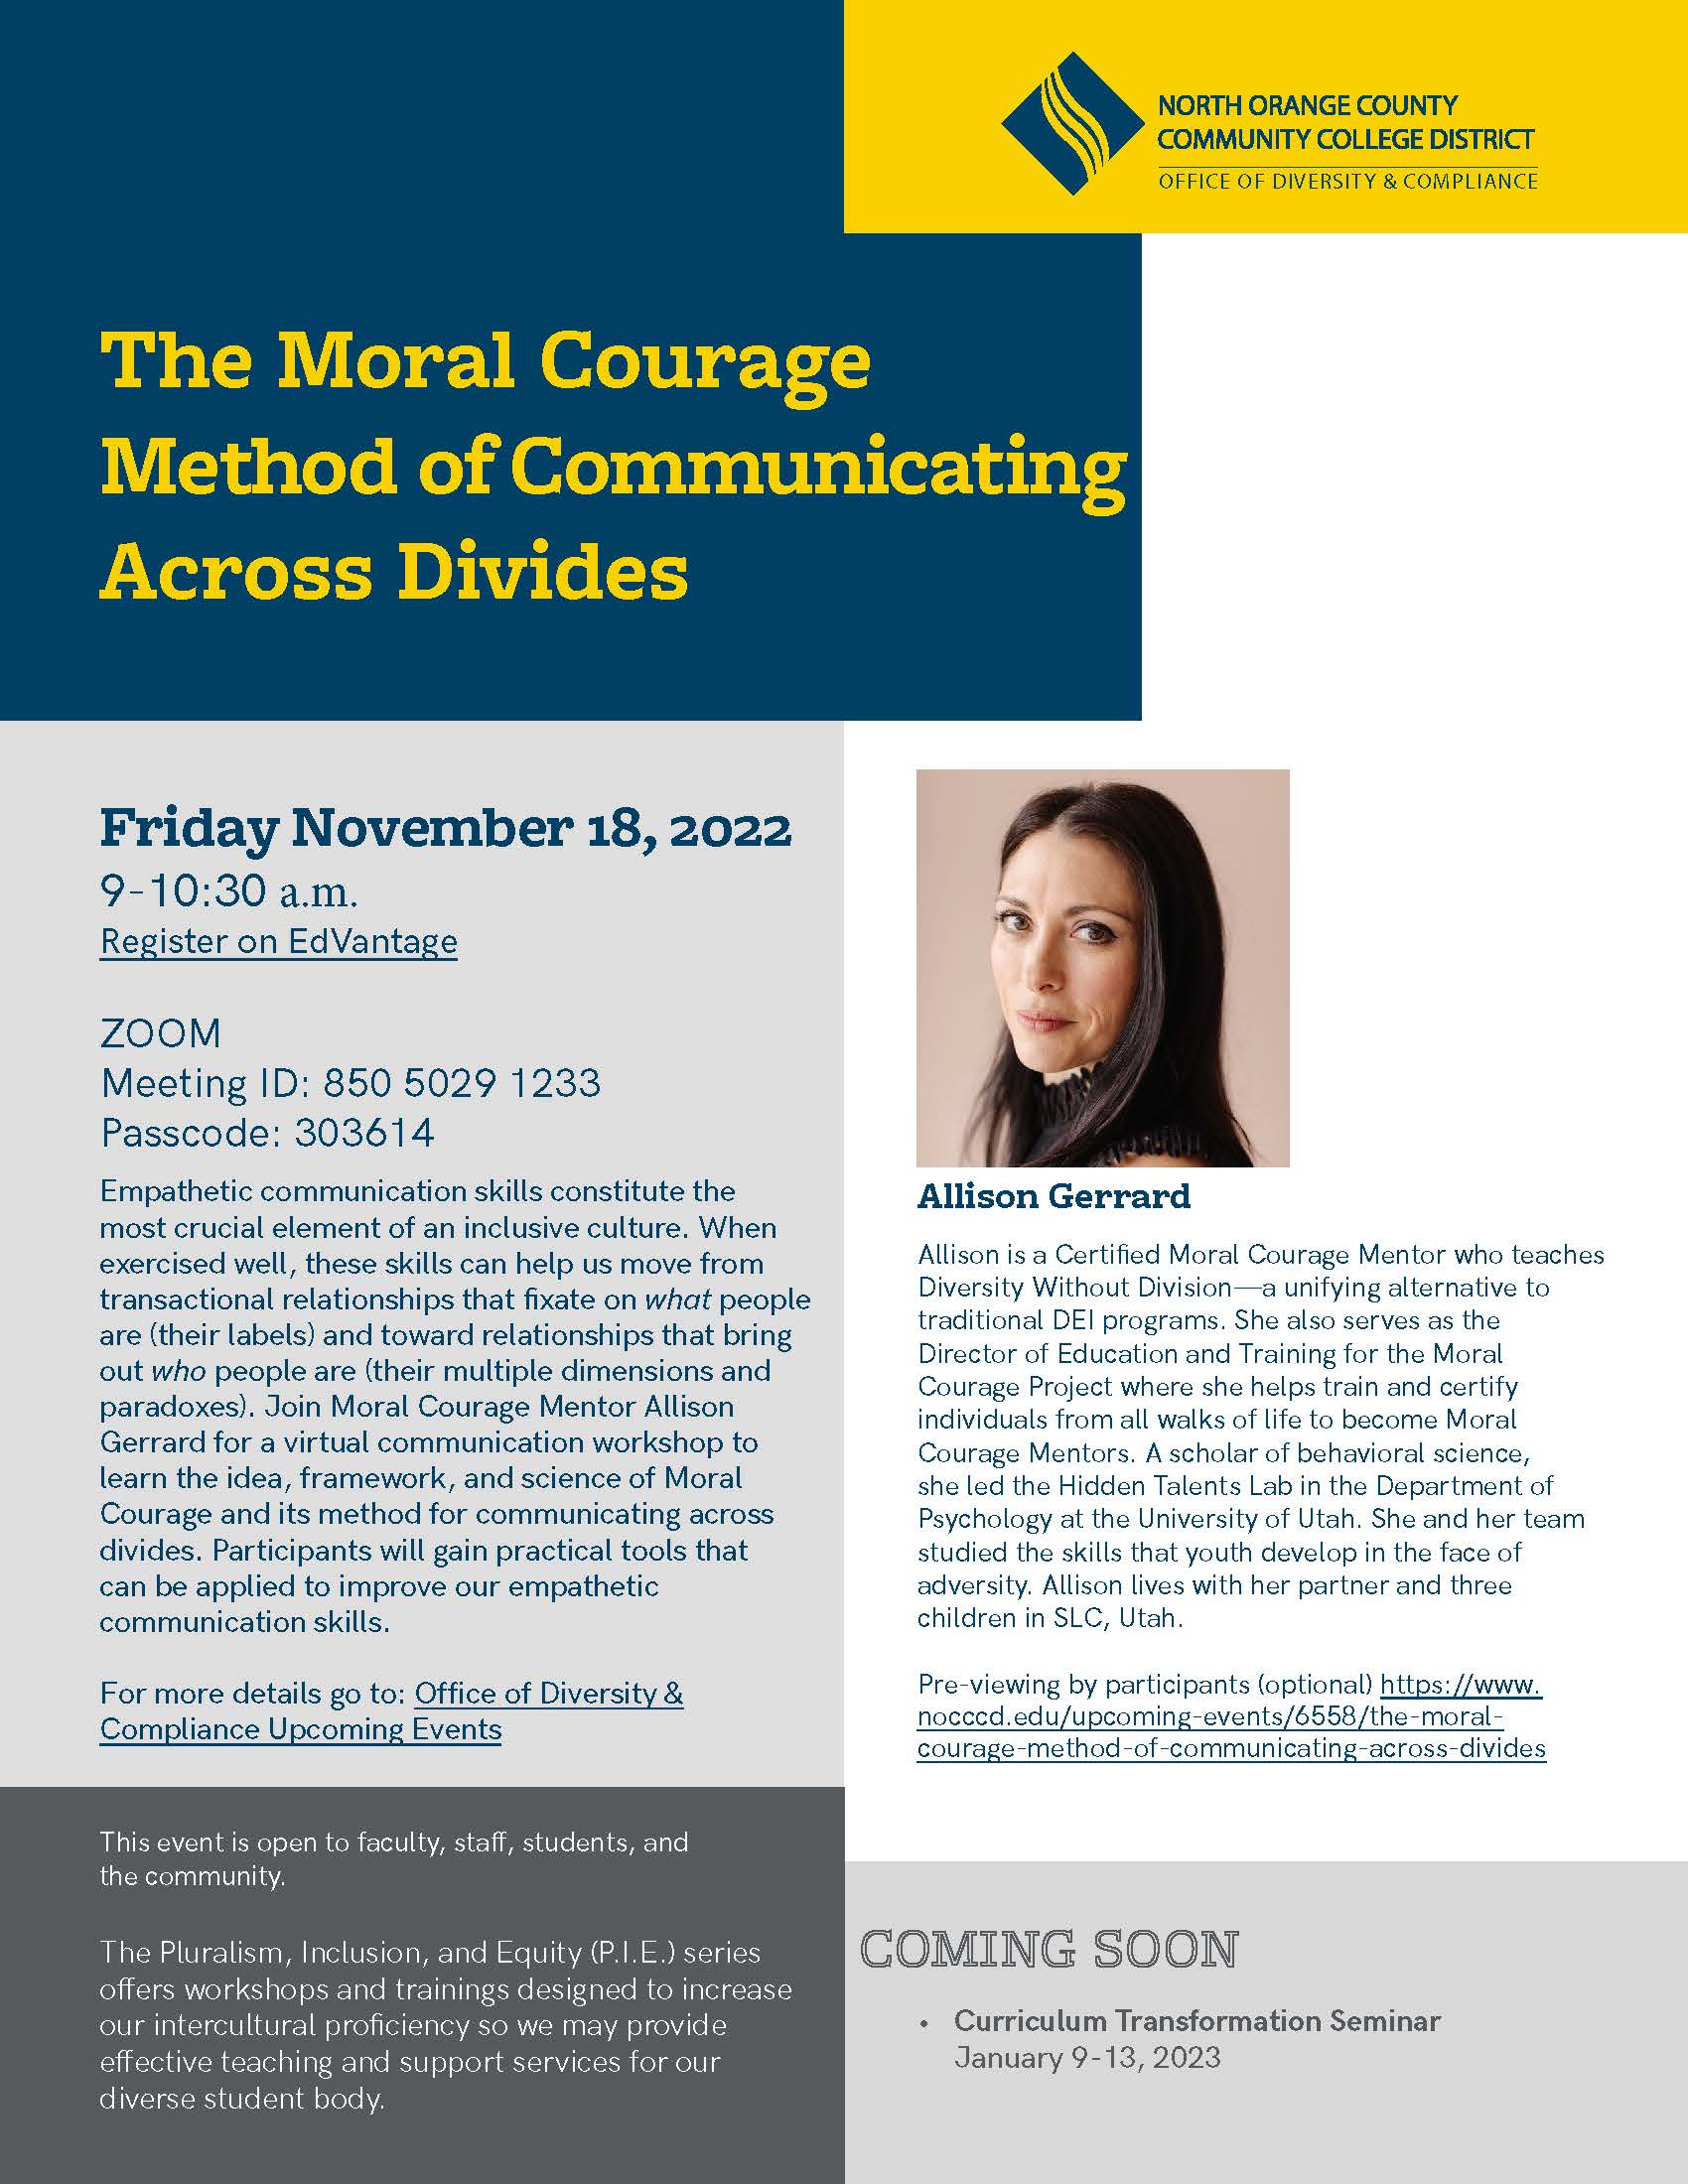 Moral Courage flyer